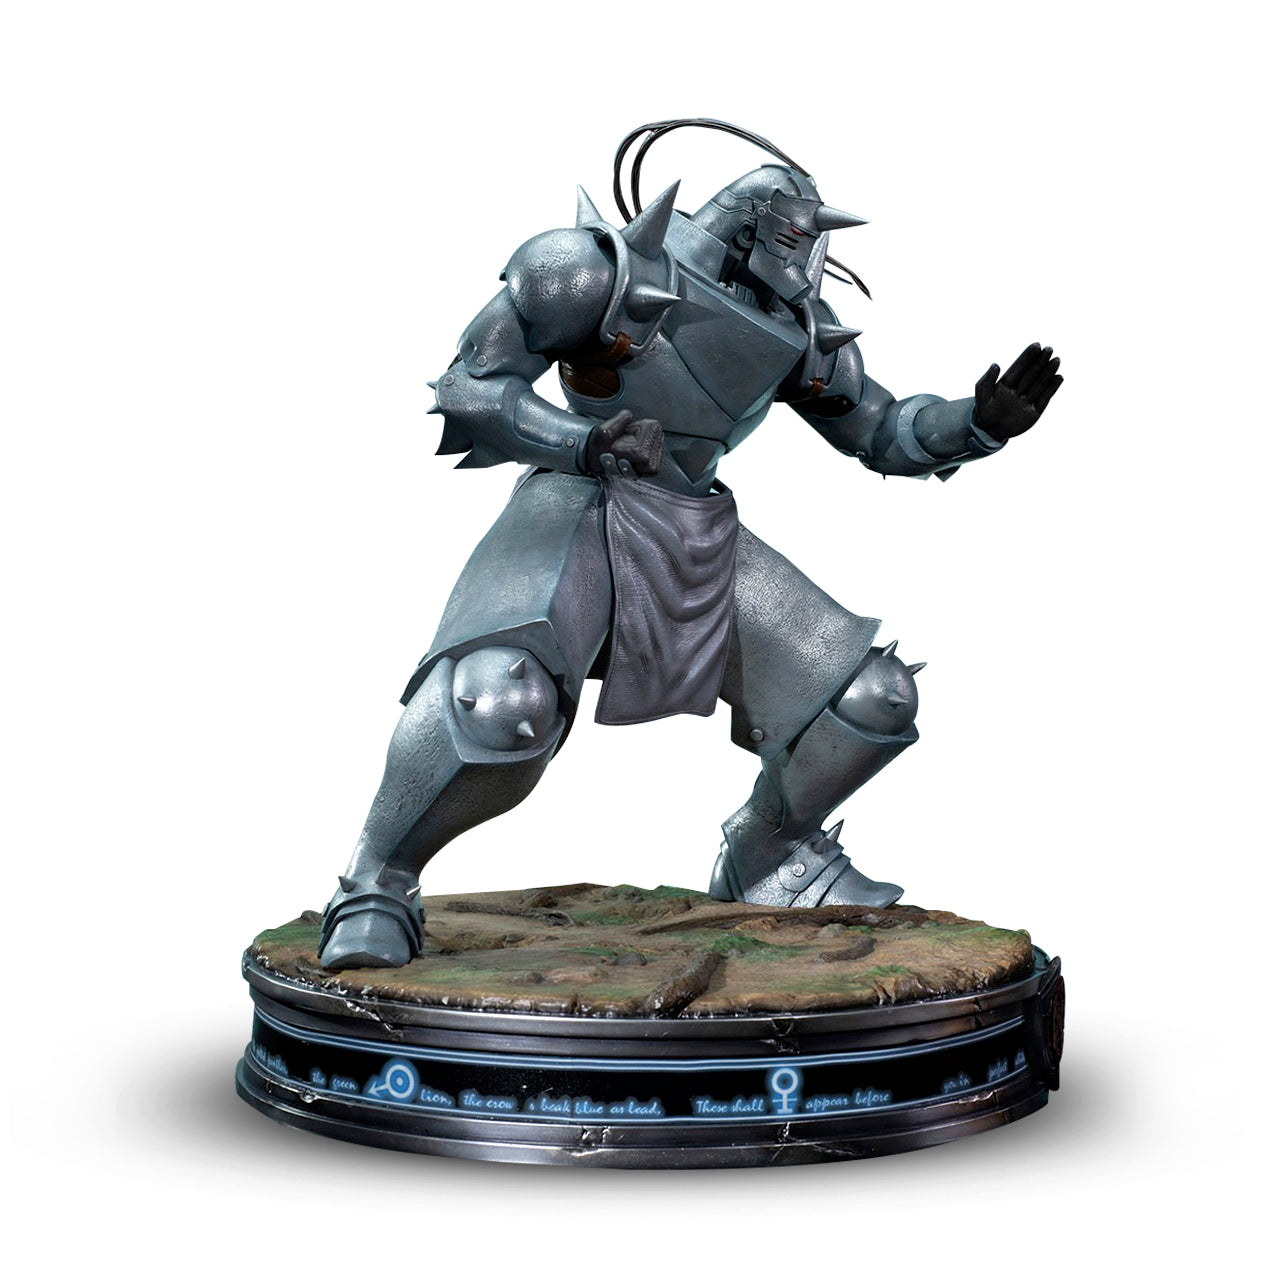 Fullmetal Alchemist: Brotherhood - Alphonse Elric First 4 Figures Statue (Gray Variant) image count 2